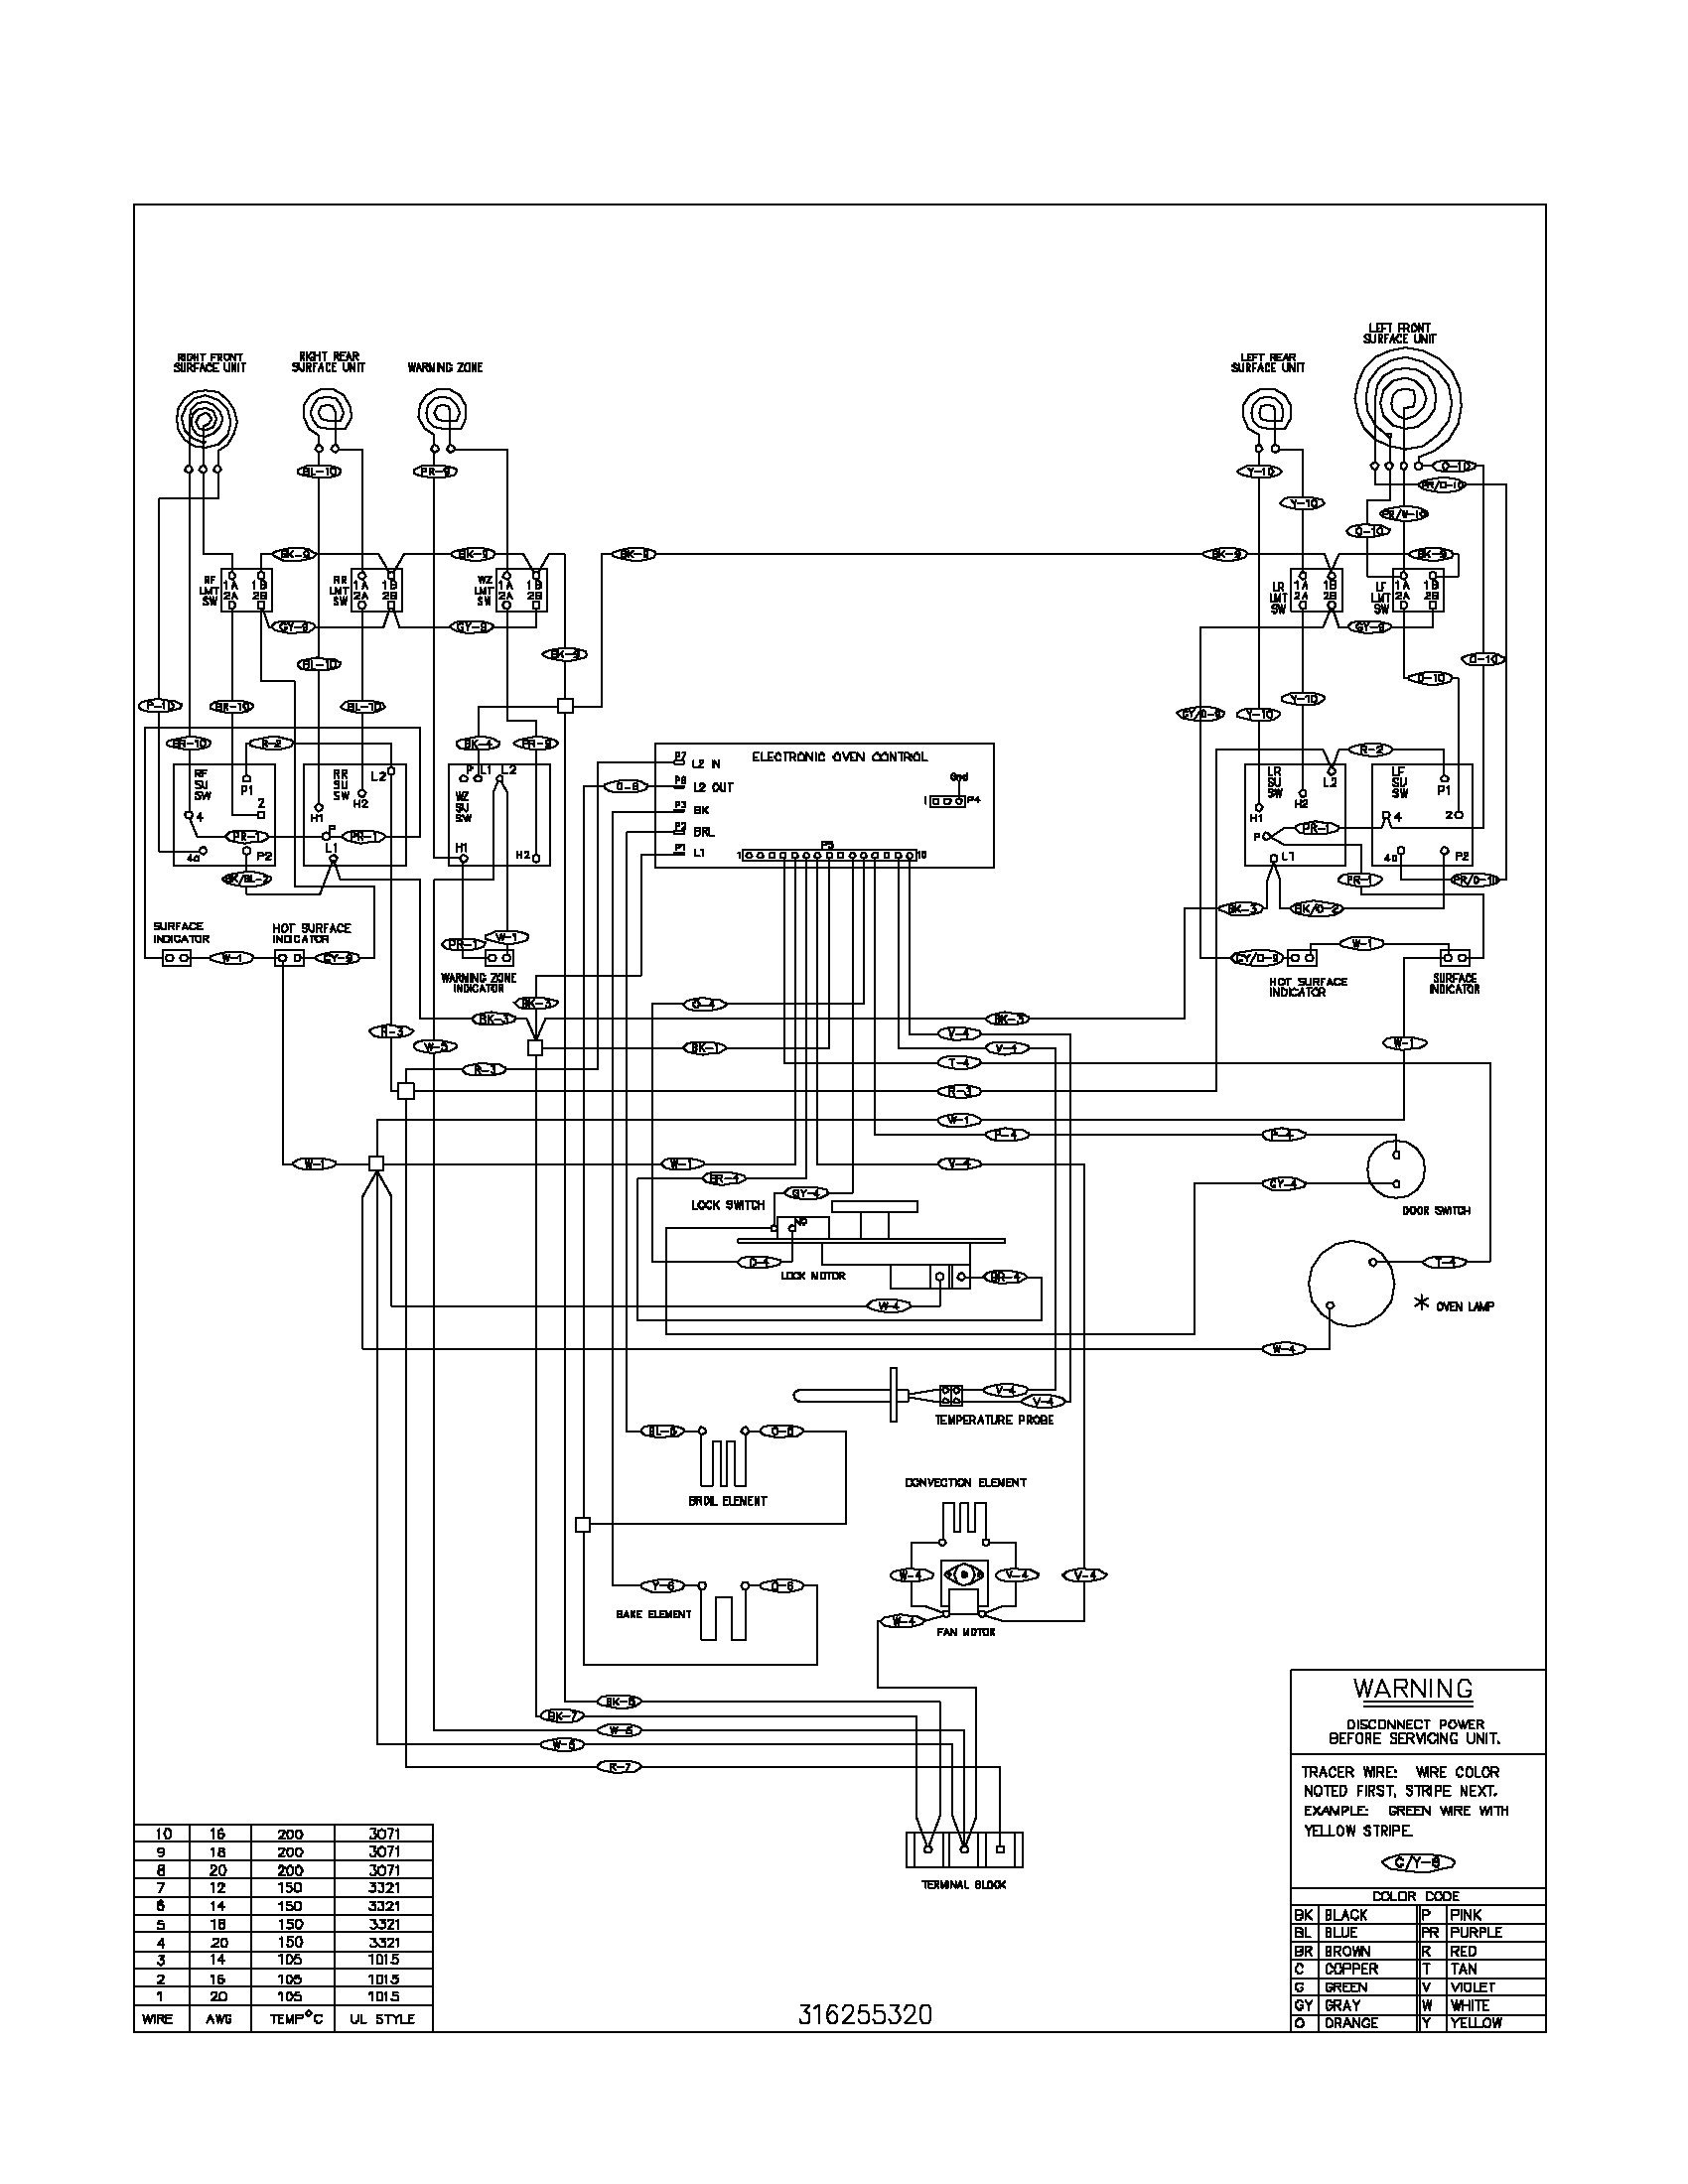 Ge Appliance Wiring Diagrams Ge Refrigerator Wiring Circuit Diagram Wiring Diagram